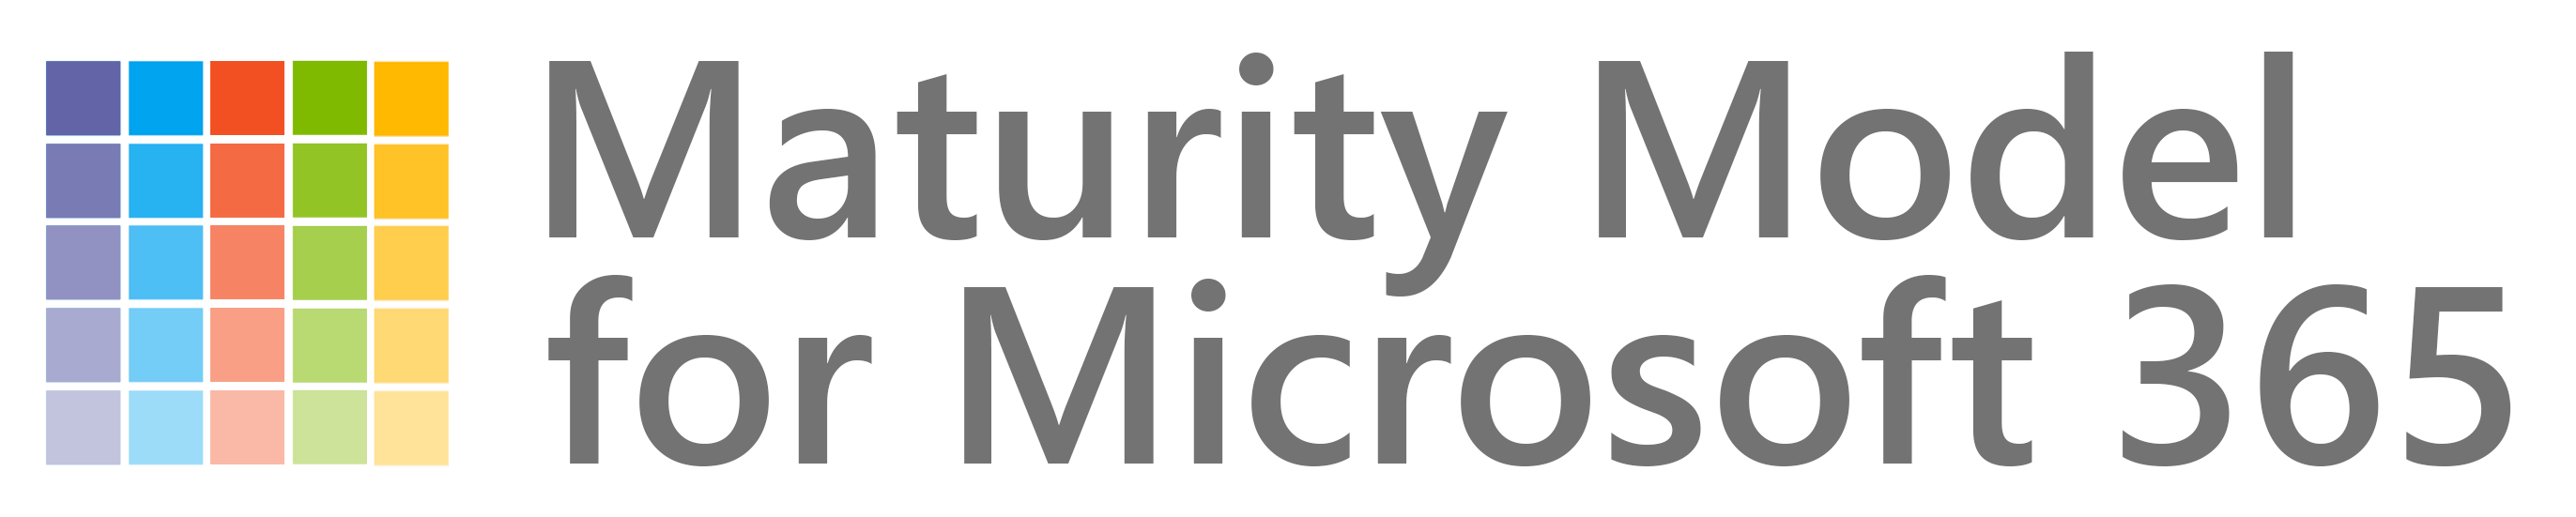 Maturity Model for Microsoft 365